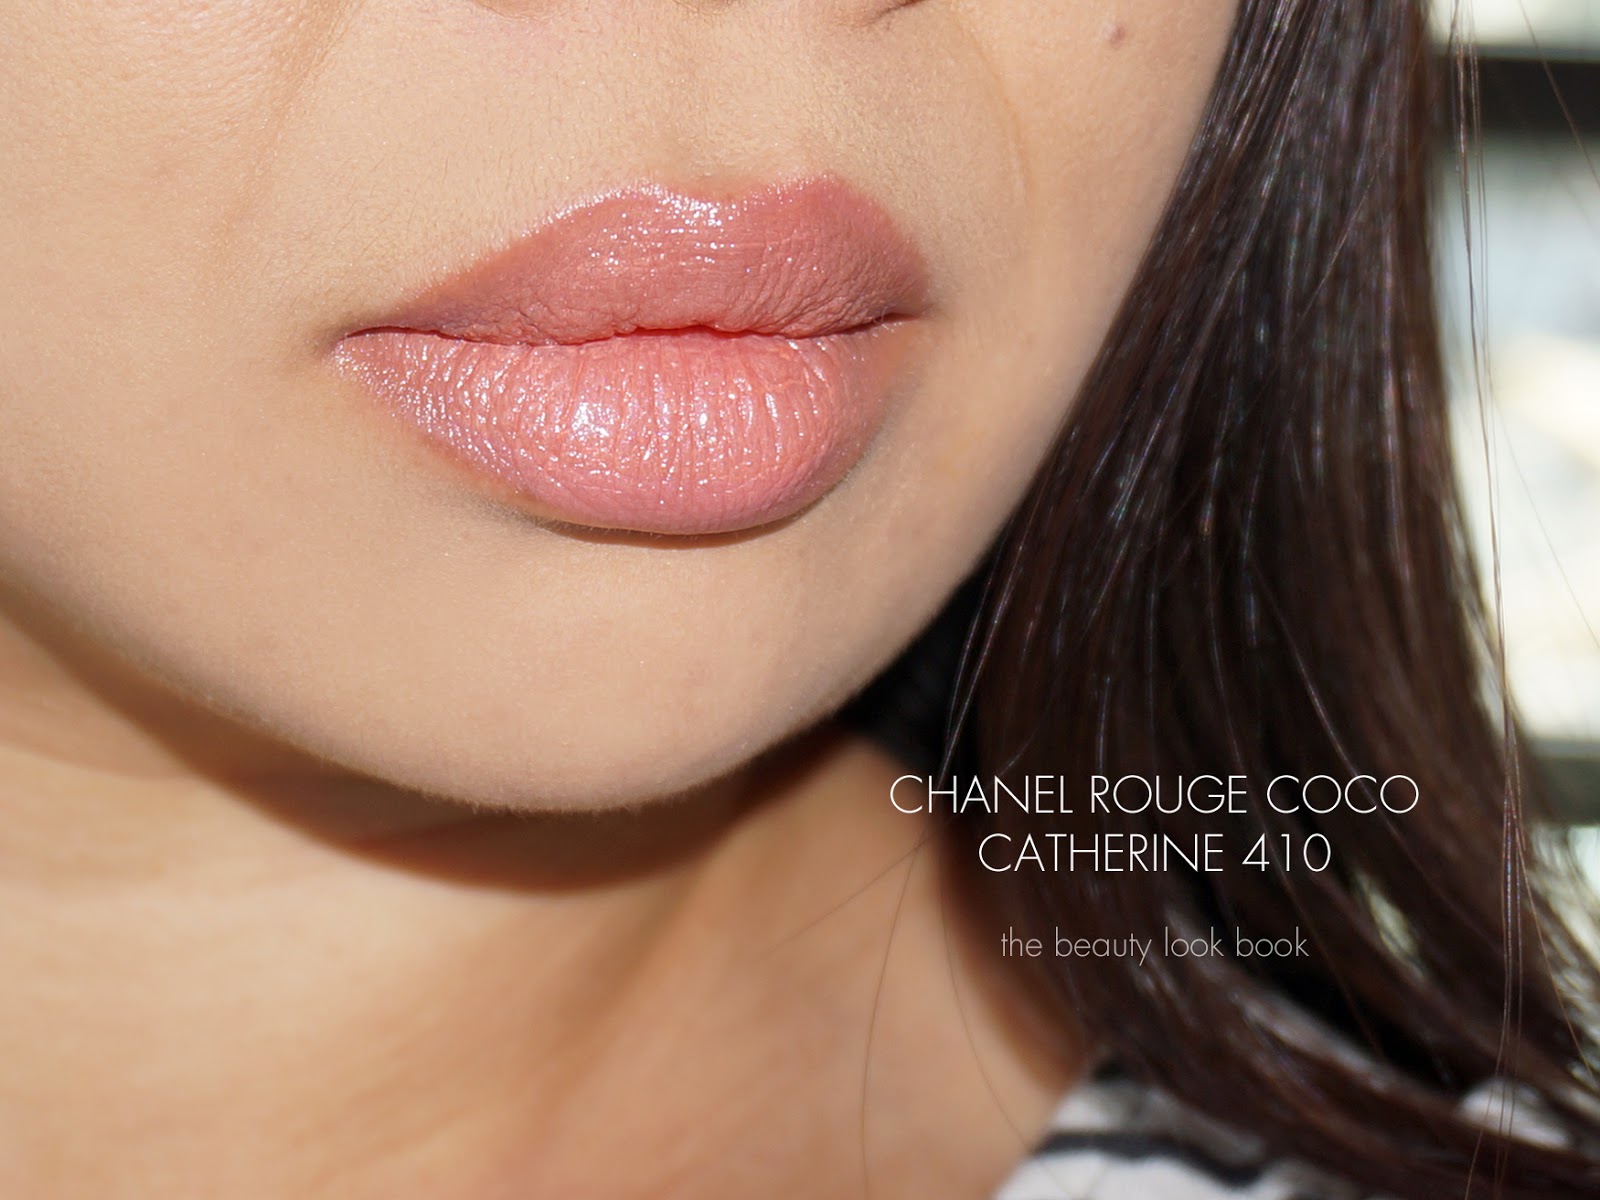 chanel mademoiselle 434 lipstick